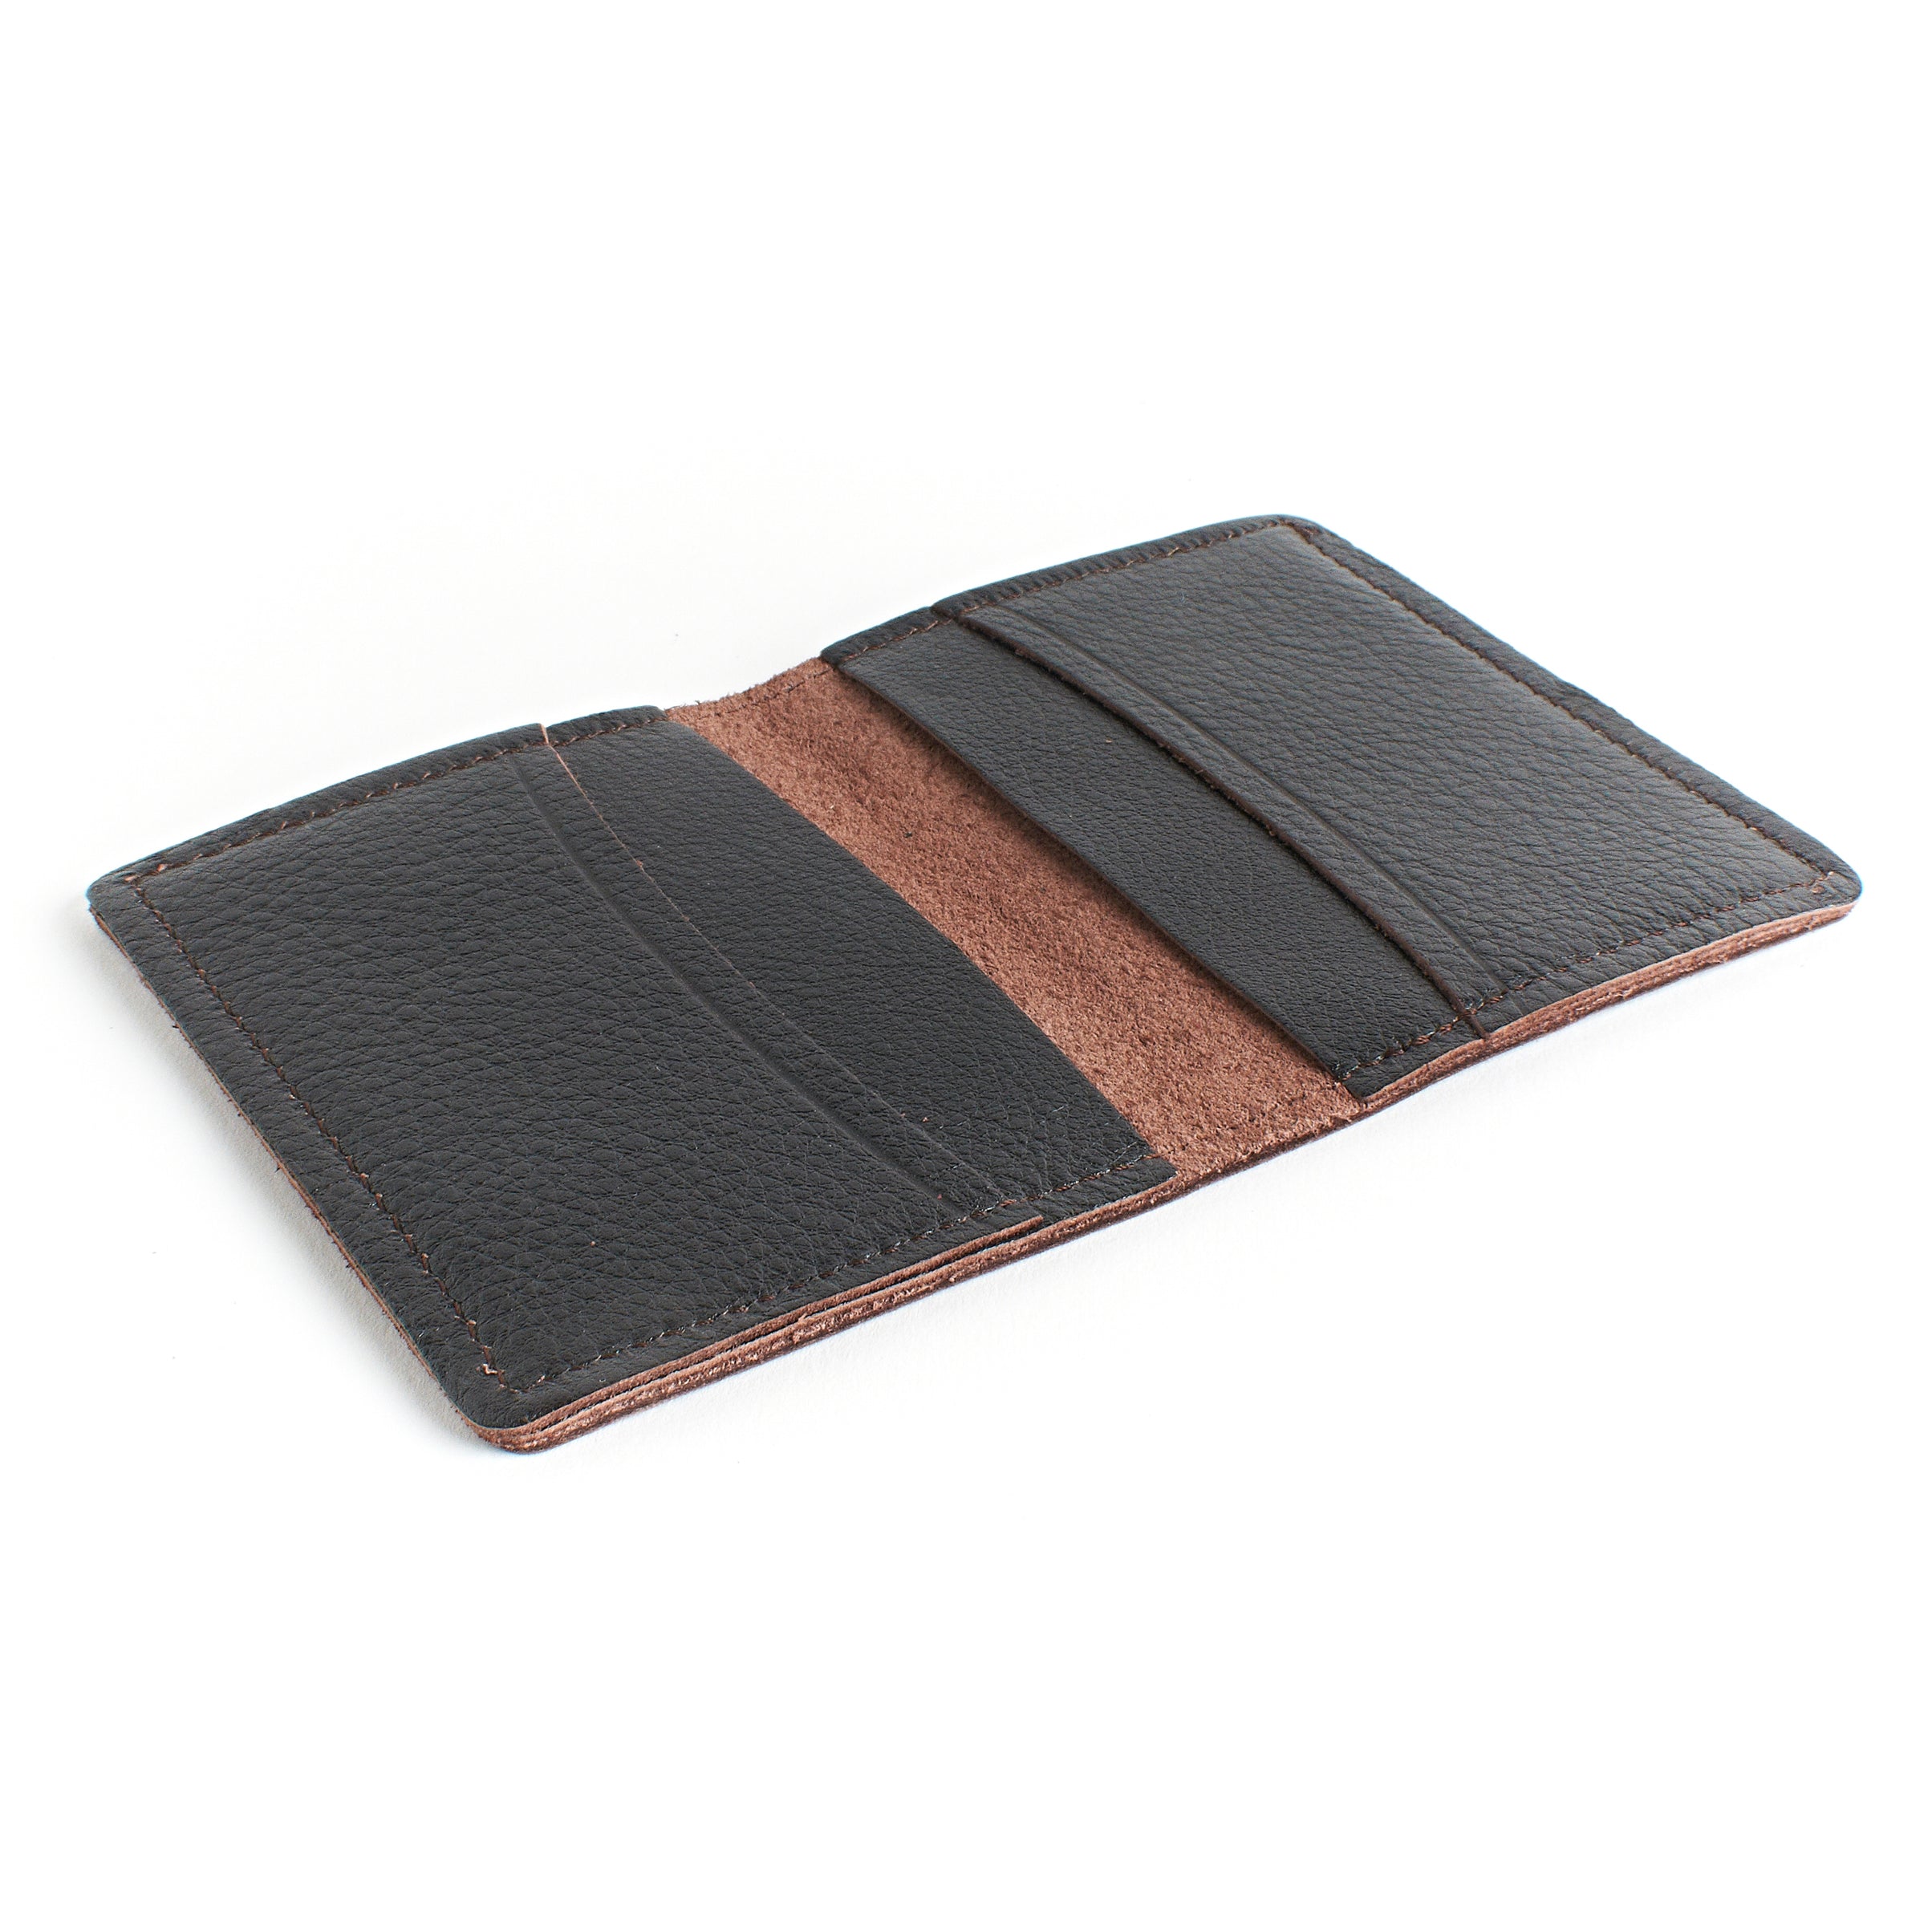 Brown Slim Leather Wallet open